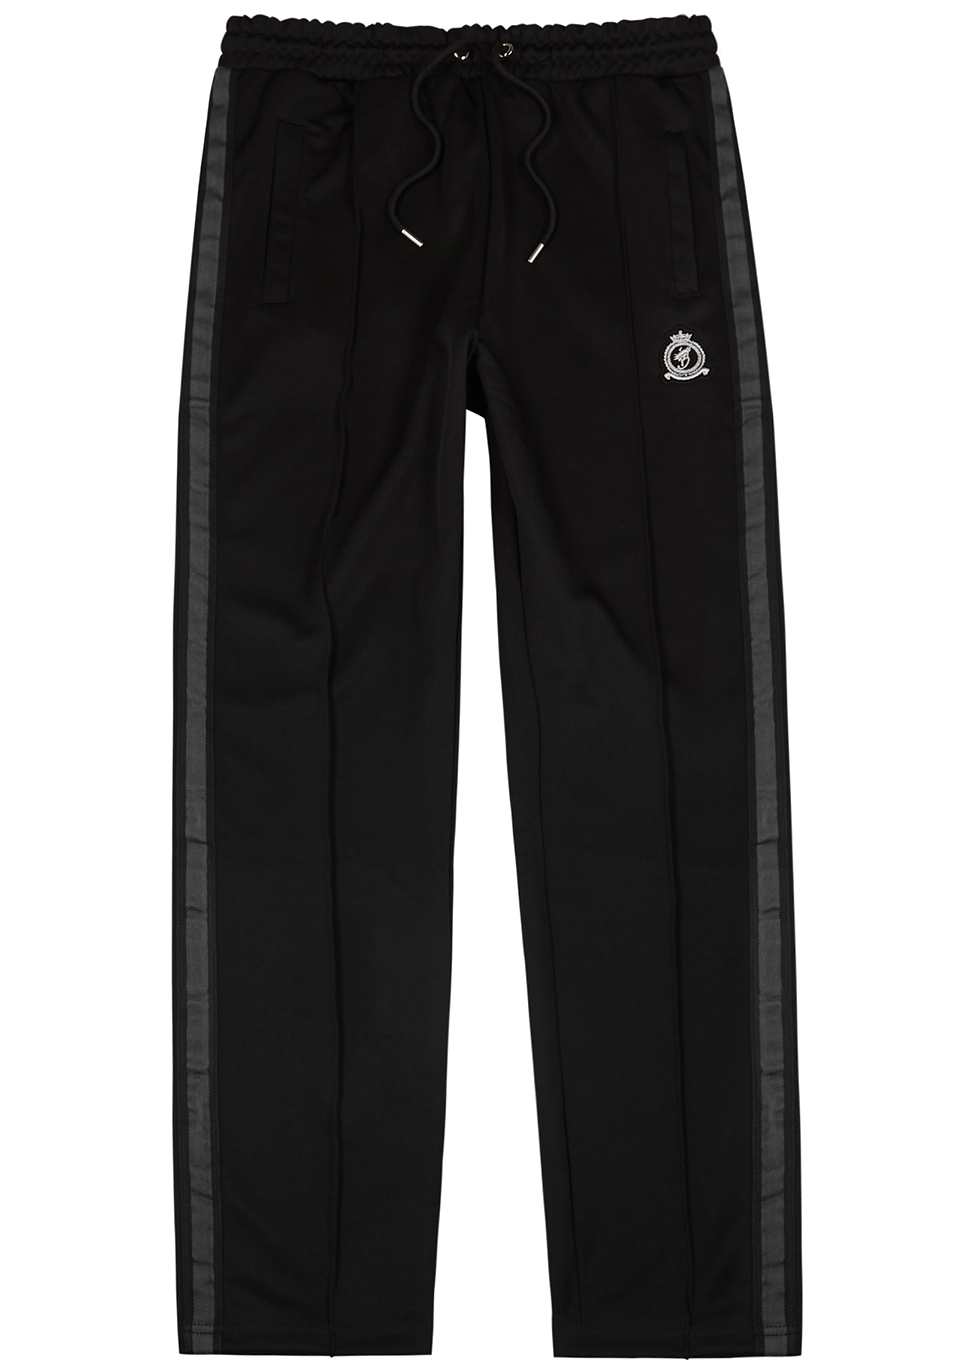 BENJART Black logo jersey track pants - Harvey Nichols